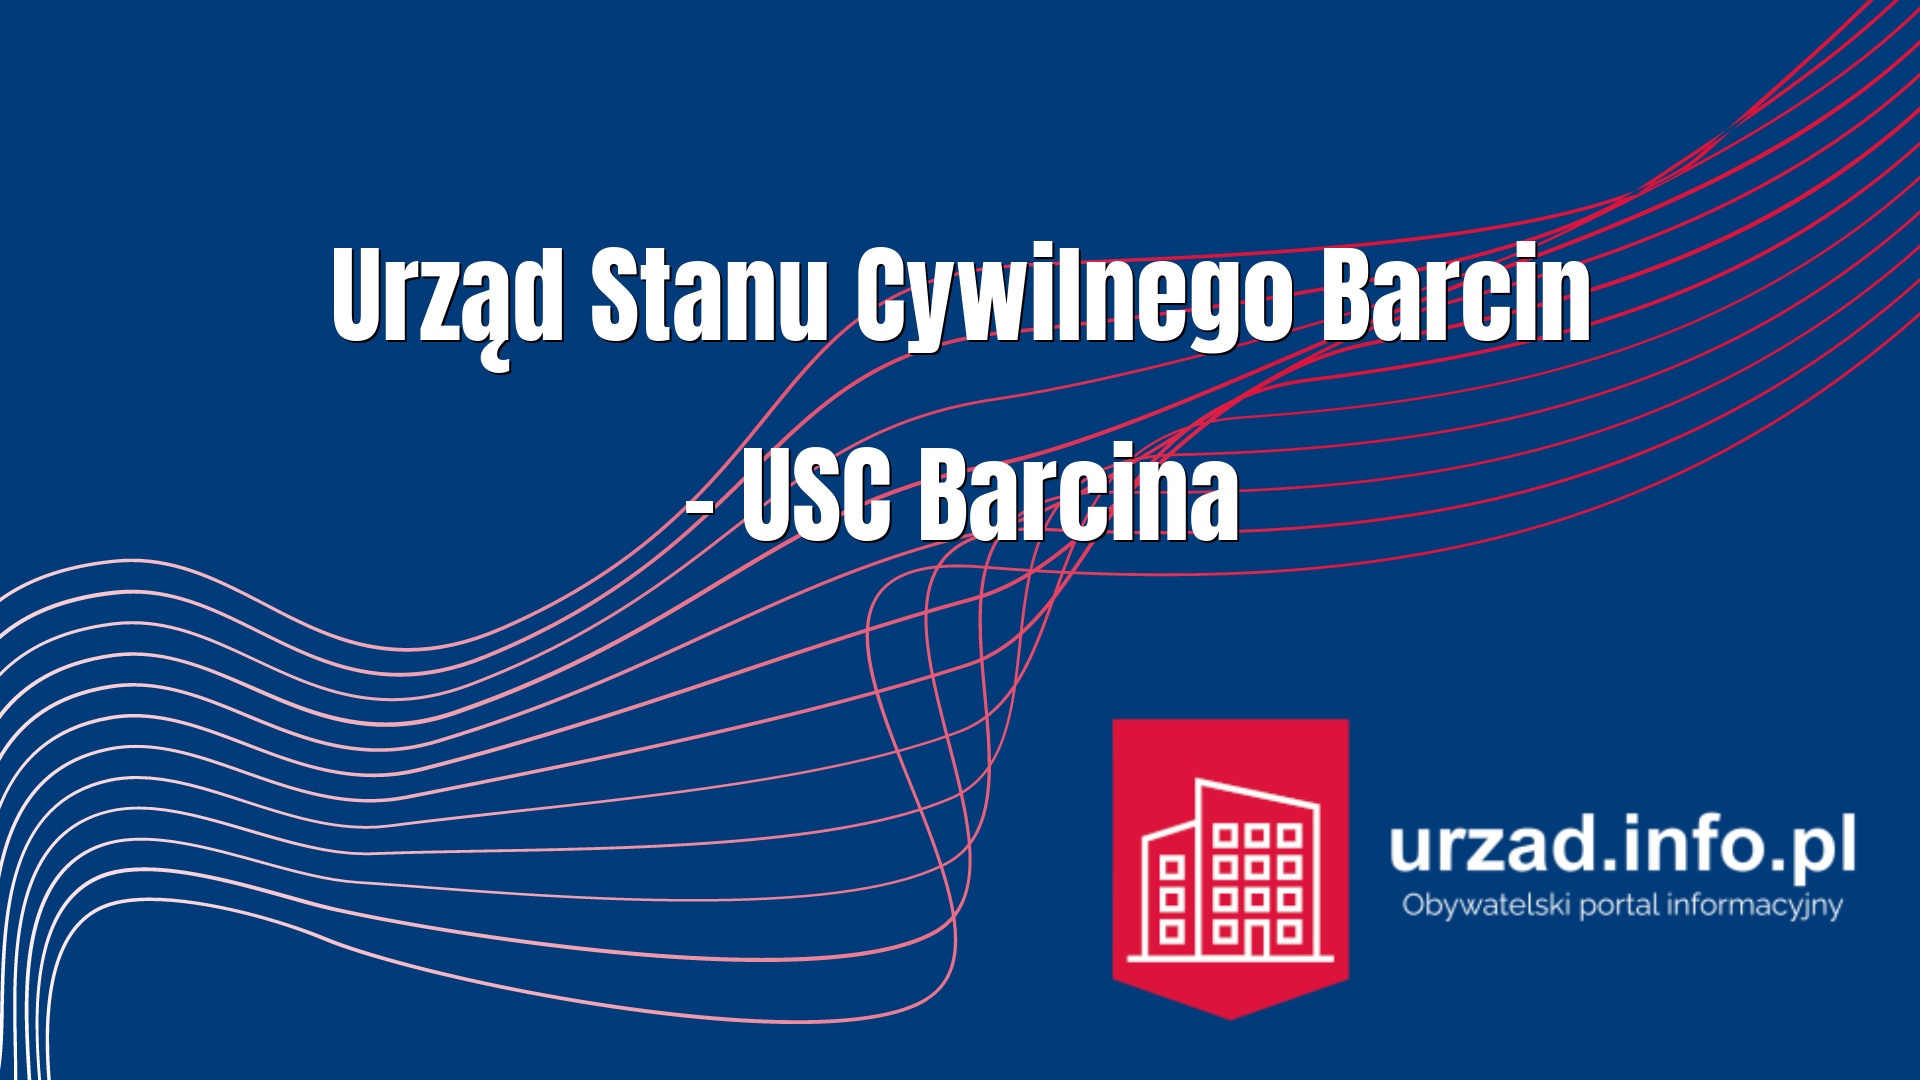 Urząd Stanu Cywilnego Barcin – USC Barcina